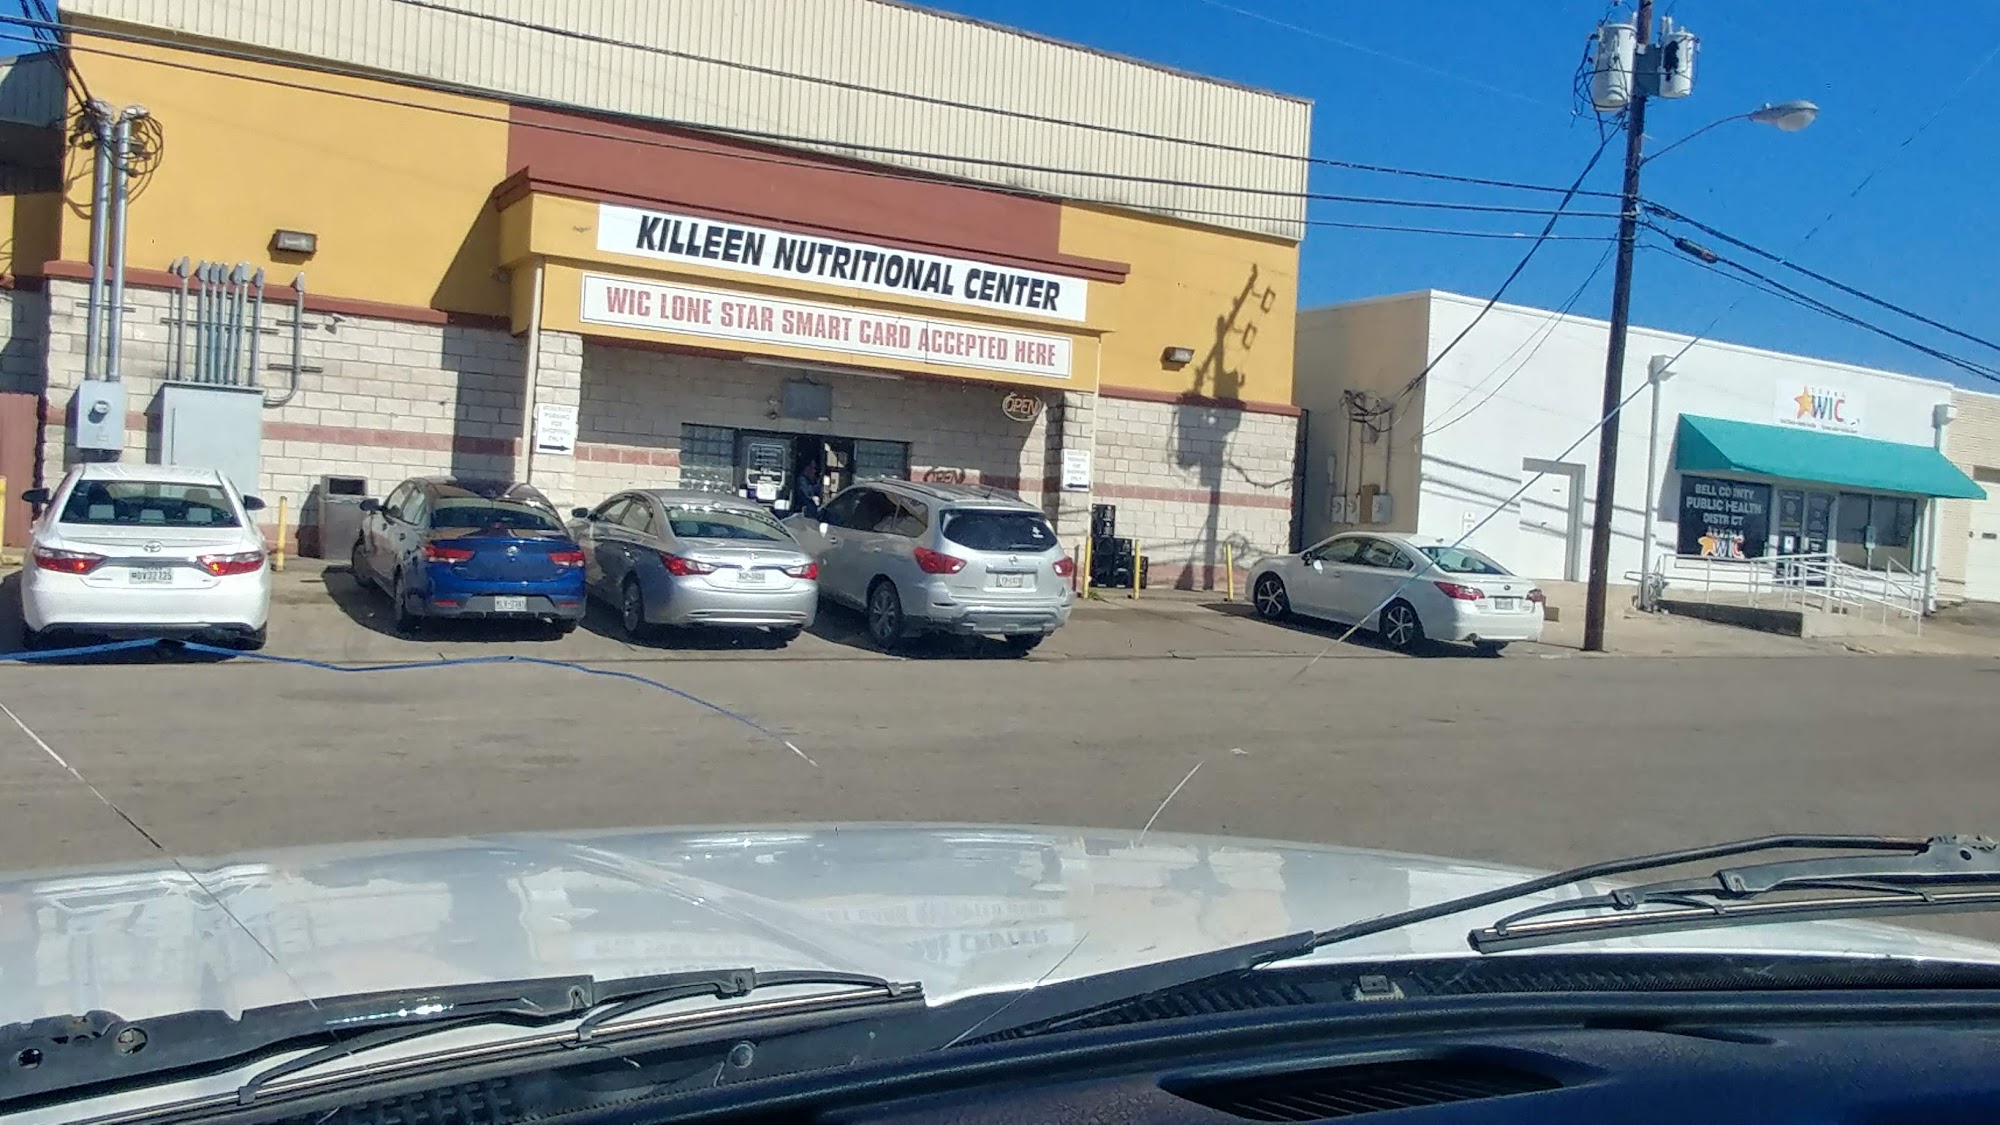 Killeen Nutritional Center (la Tiendita)